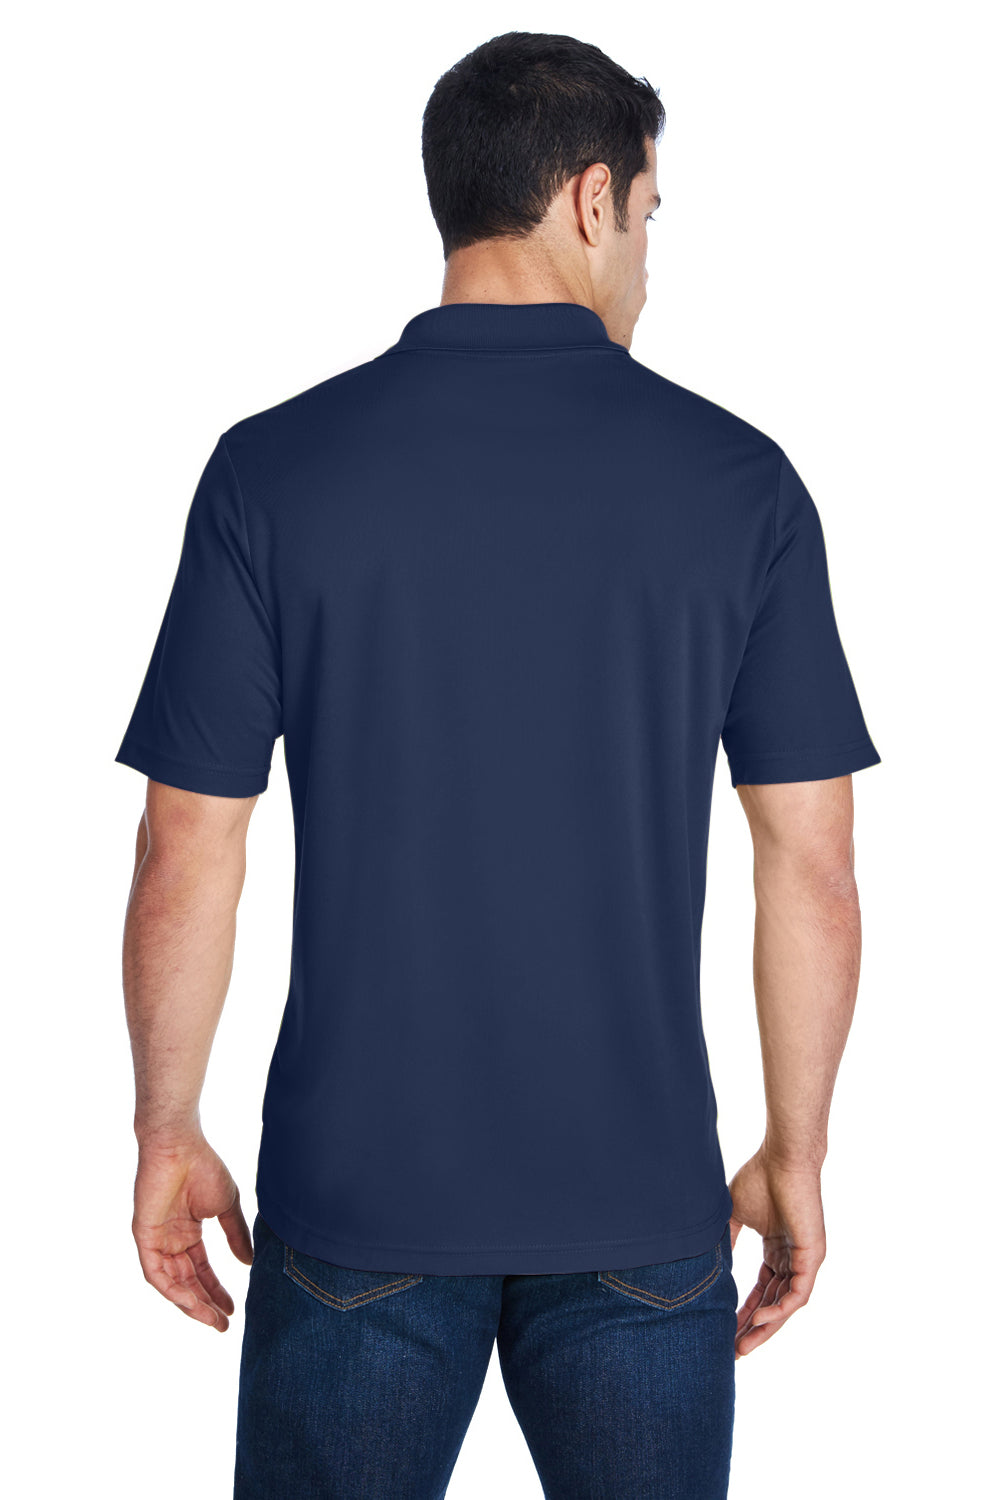 Core 365 88181 Mens Origin Performance Moisture Wicking Short Sleeve Polo Shirt Navy Blue Back